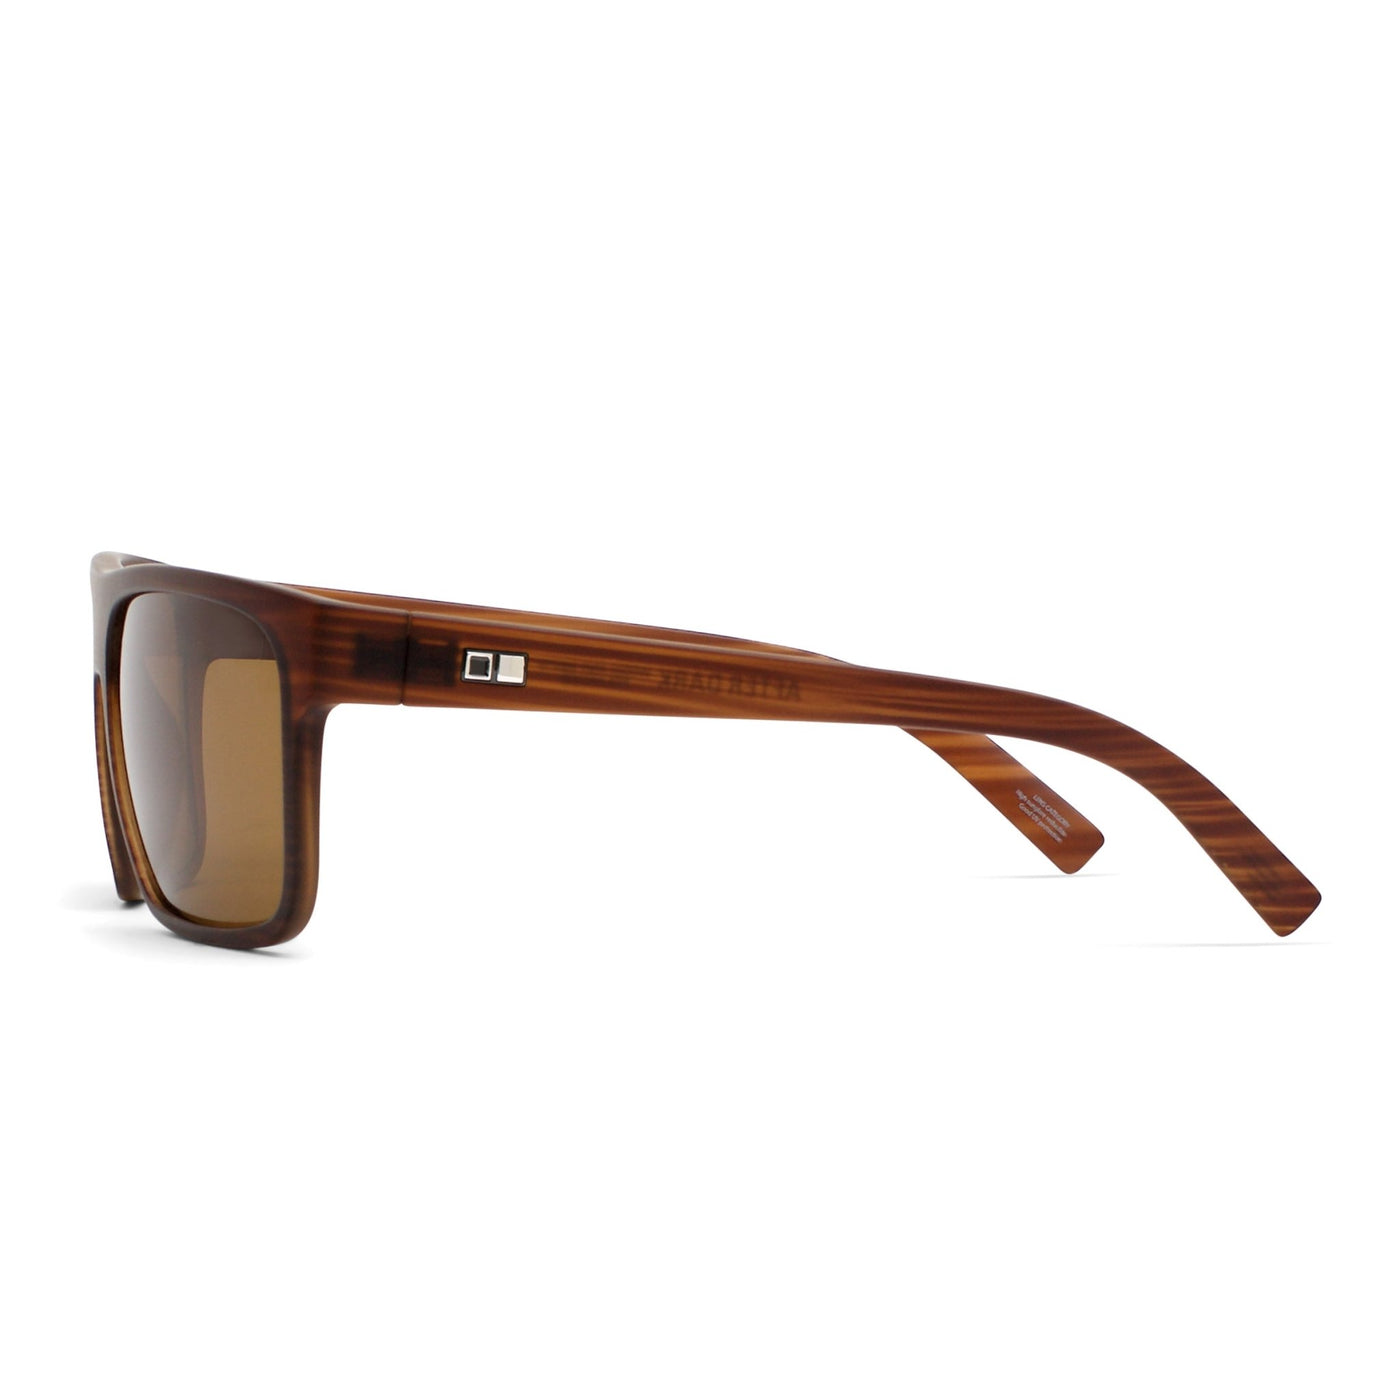 Brown OTIS Eyewear sunglasses from the side